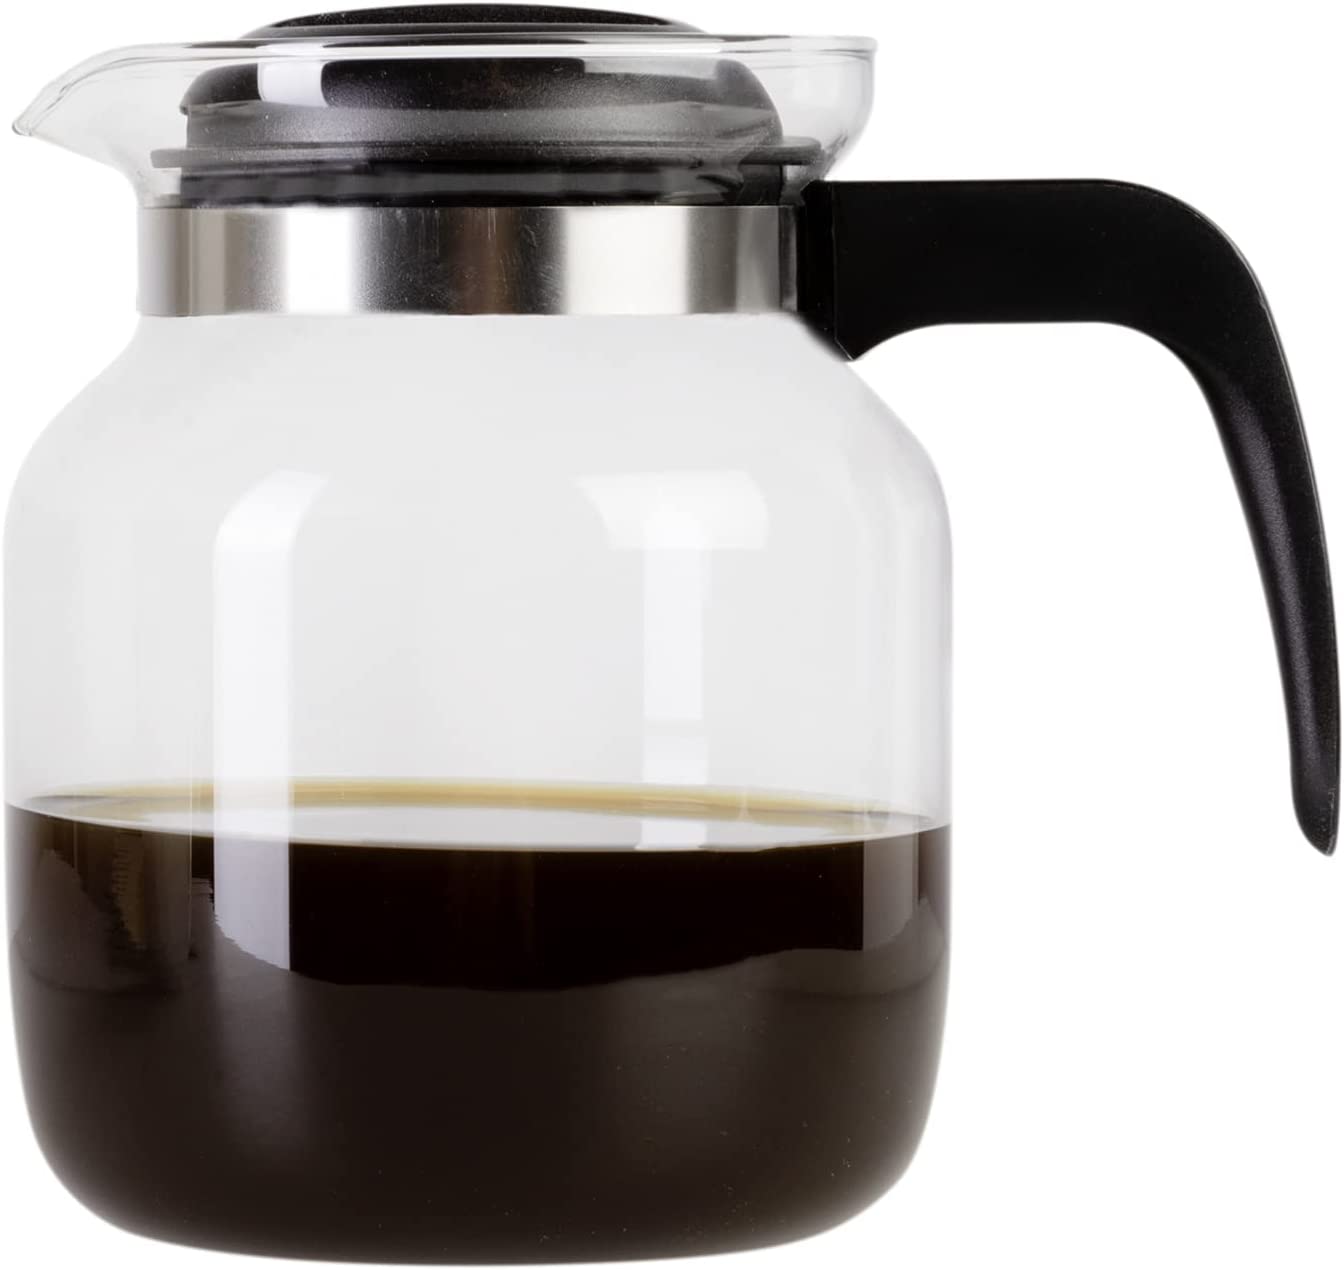 Wenco Premium Glass Coffee Pot/Teapot with Plastic Lid, 1.25 Litre, Clear, Black (2021 version)